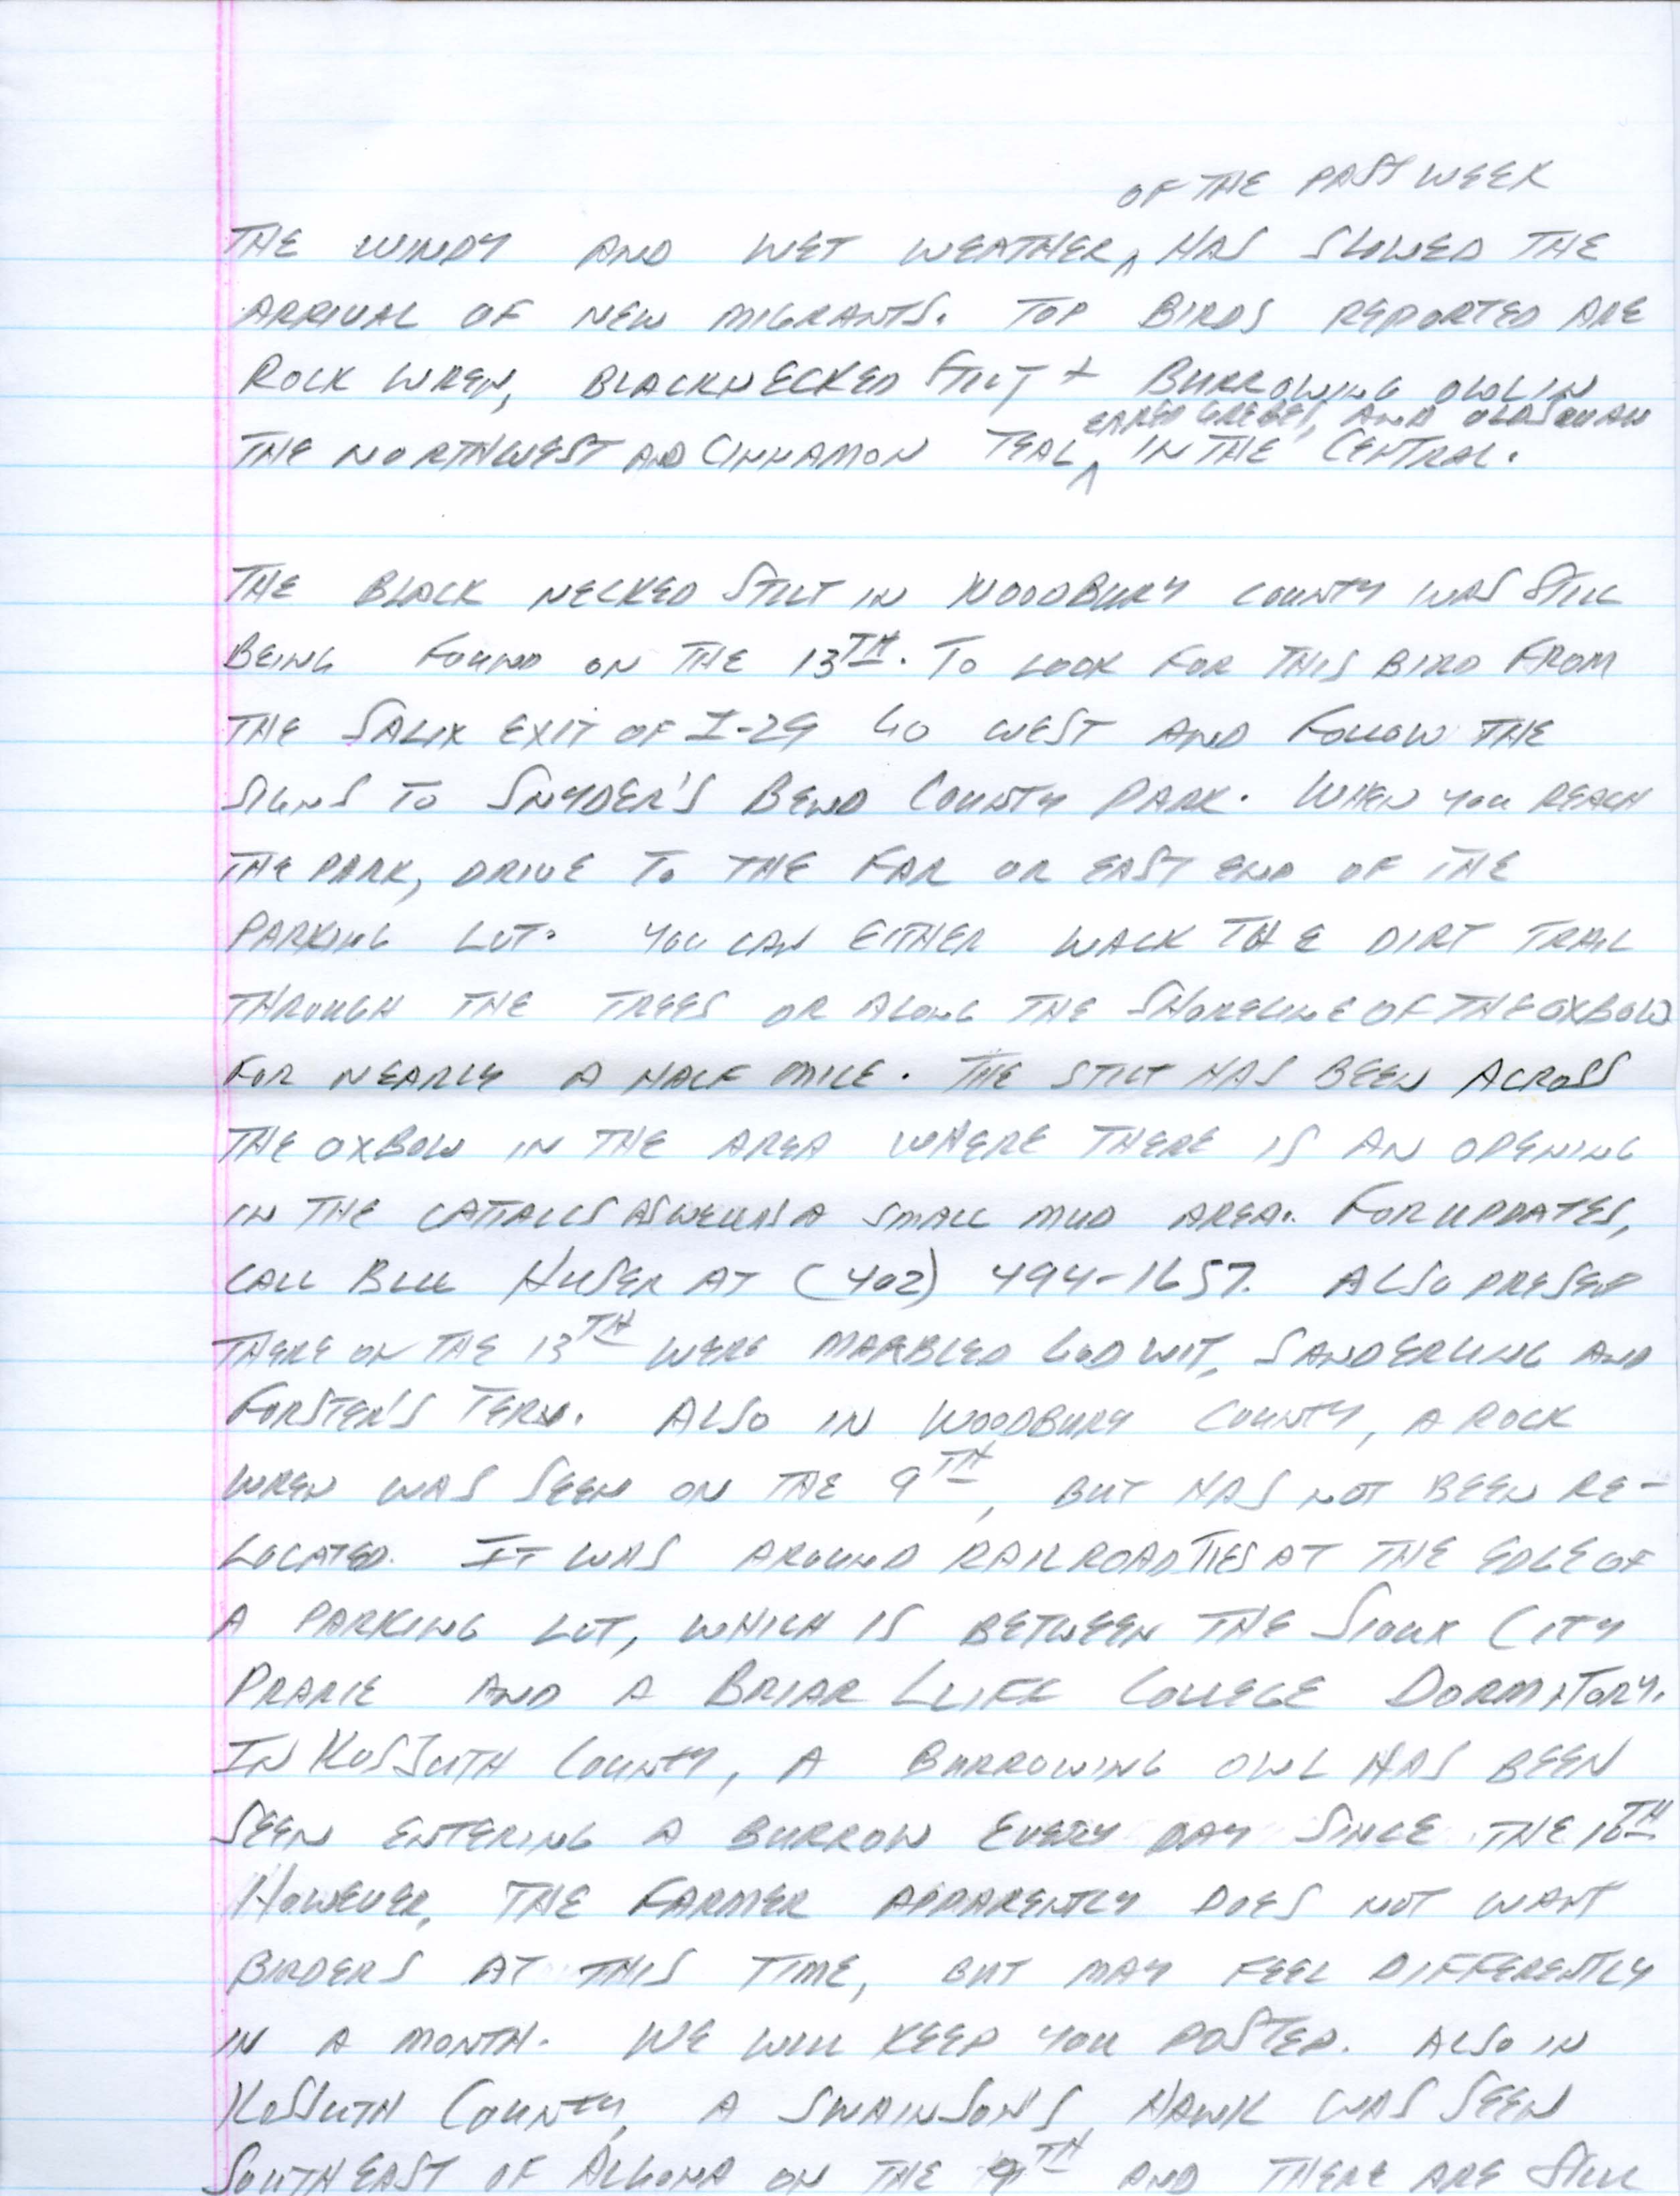 Iowa Birdline update, April 15, 1991 notes